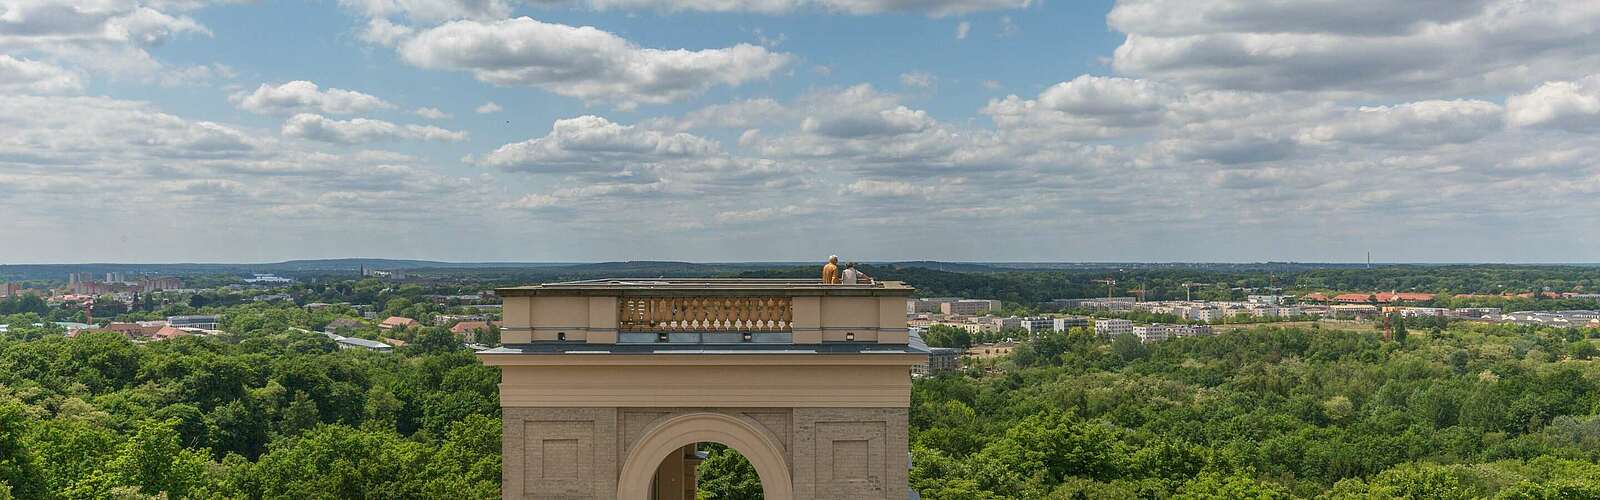 Blick vom Schloss Belvedere über Potsdam,
        
    

        Foto: TMB-Fotoarchiv/SPSG/Steffen Lehmann